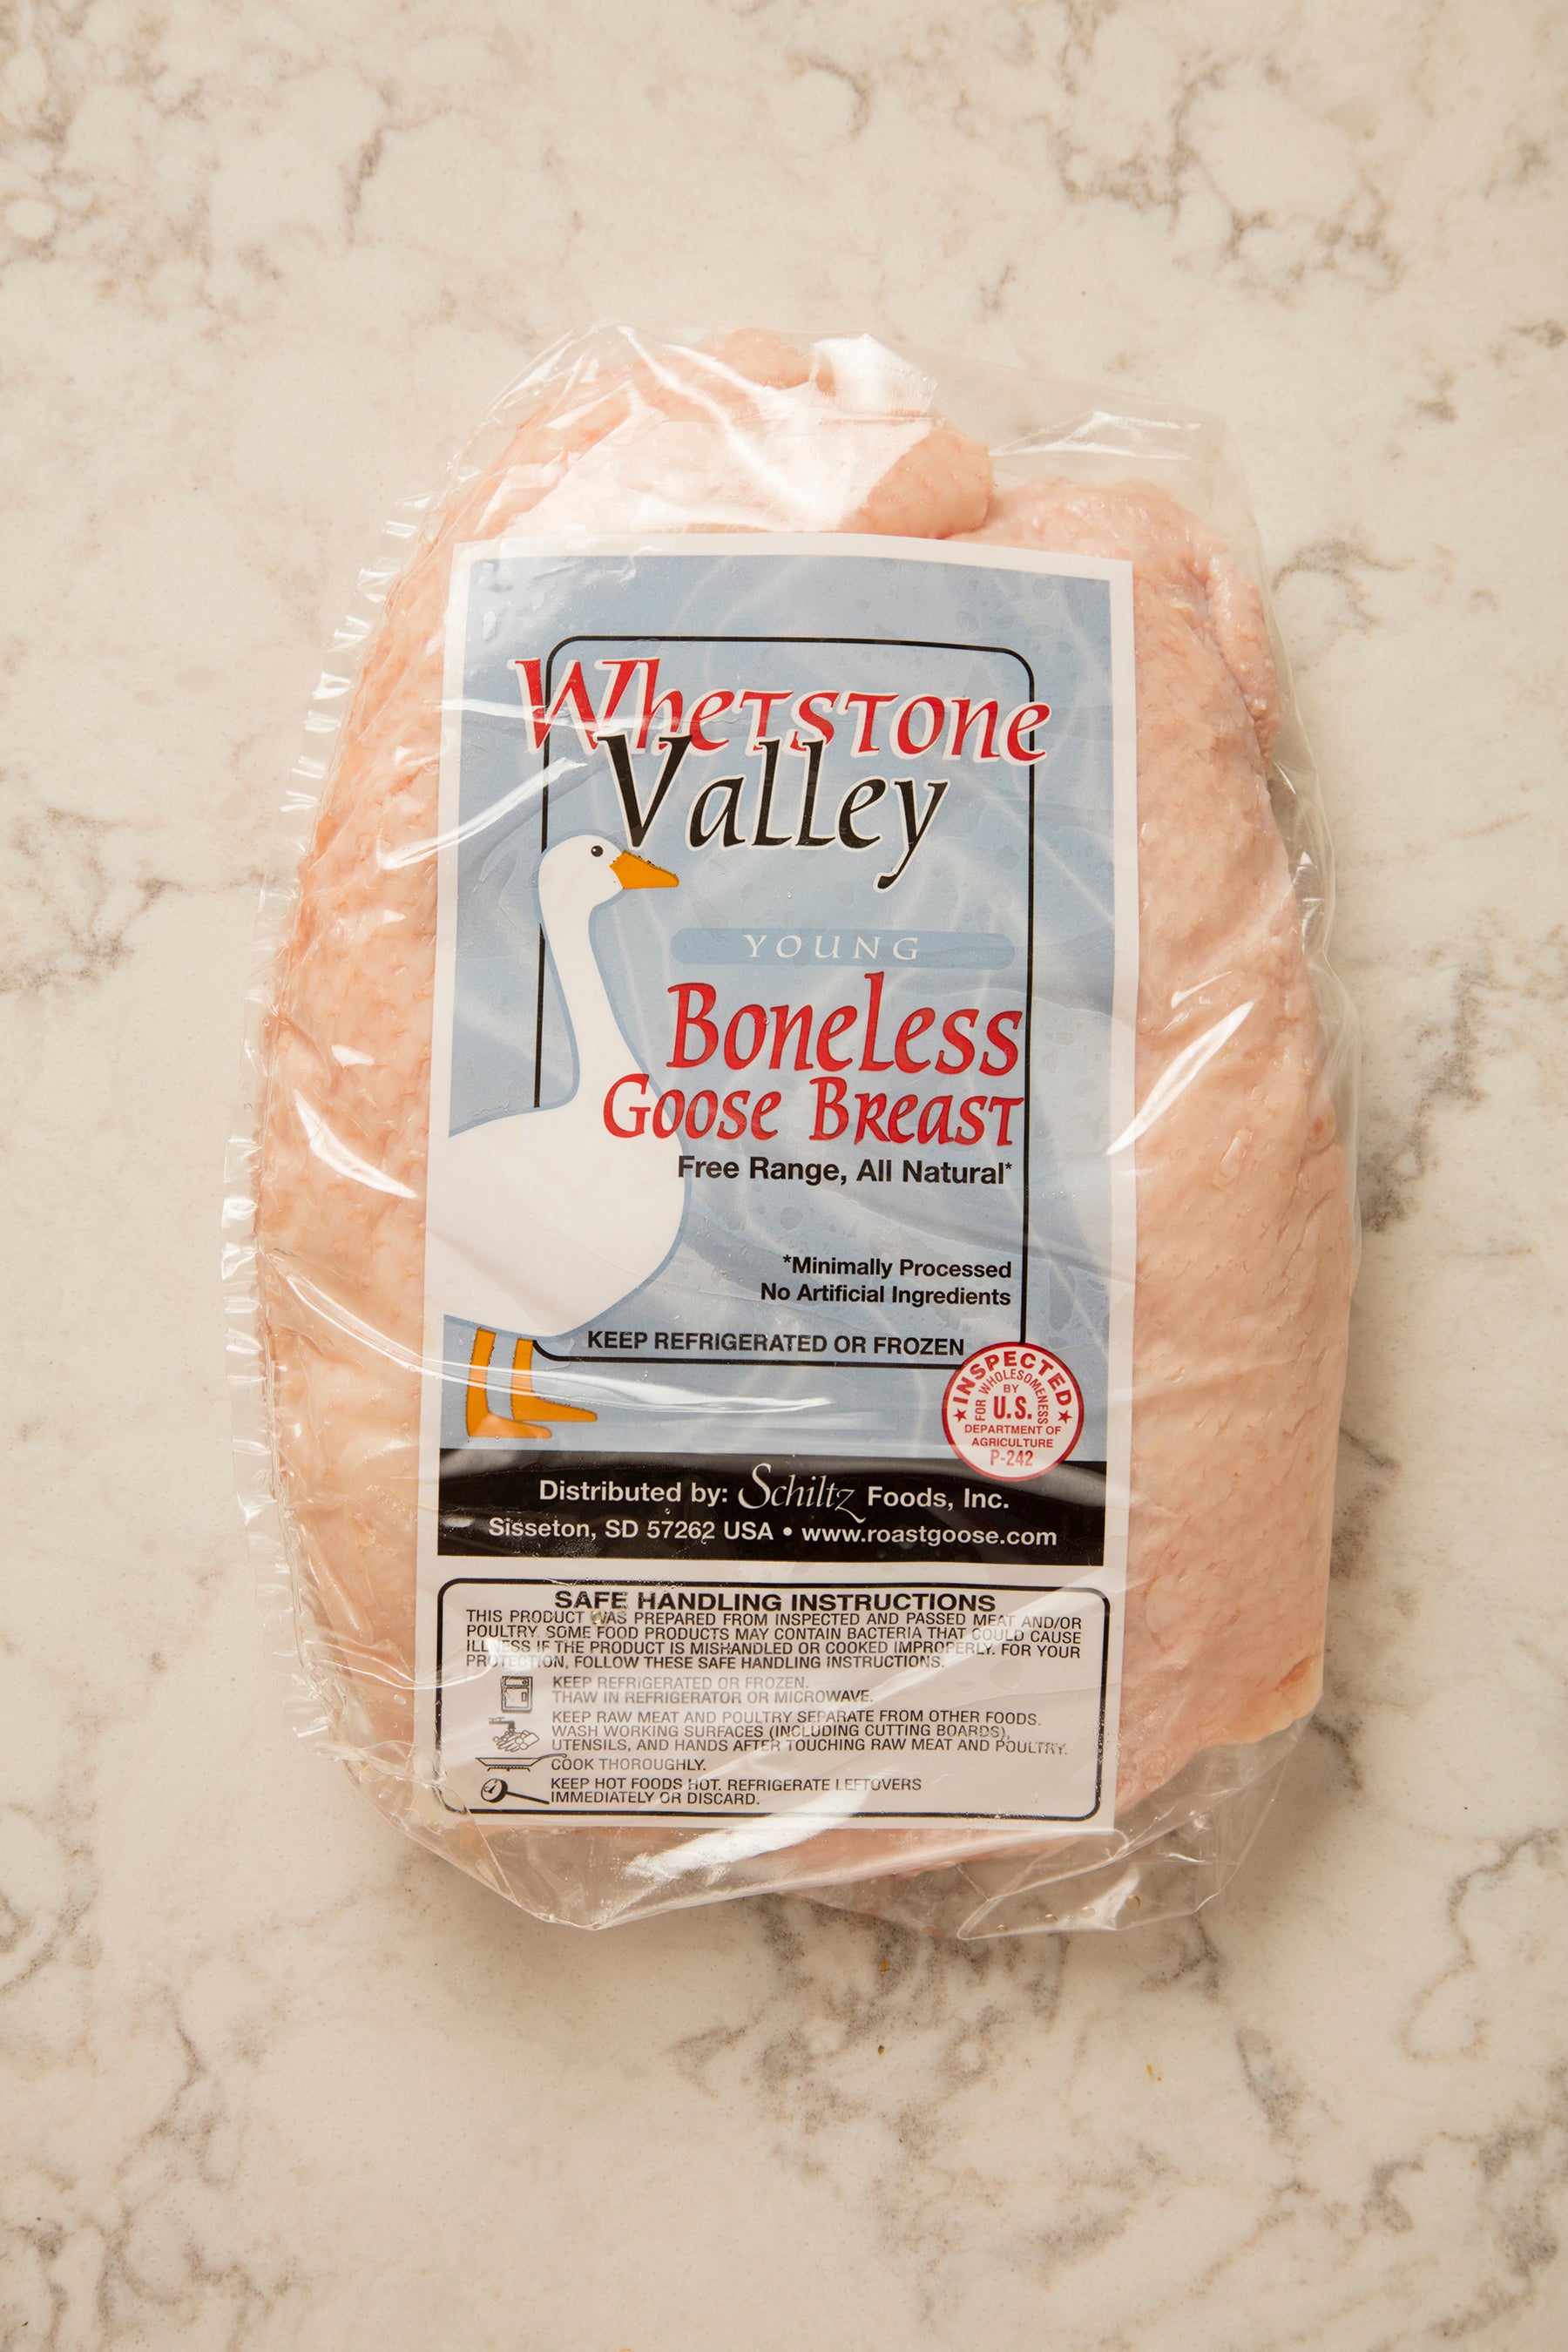 Whetstone Valley Young Split Boneless Goose Breast